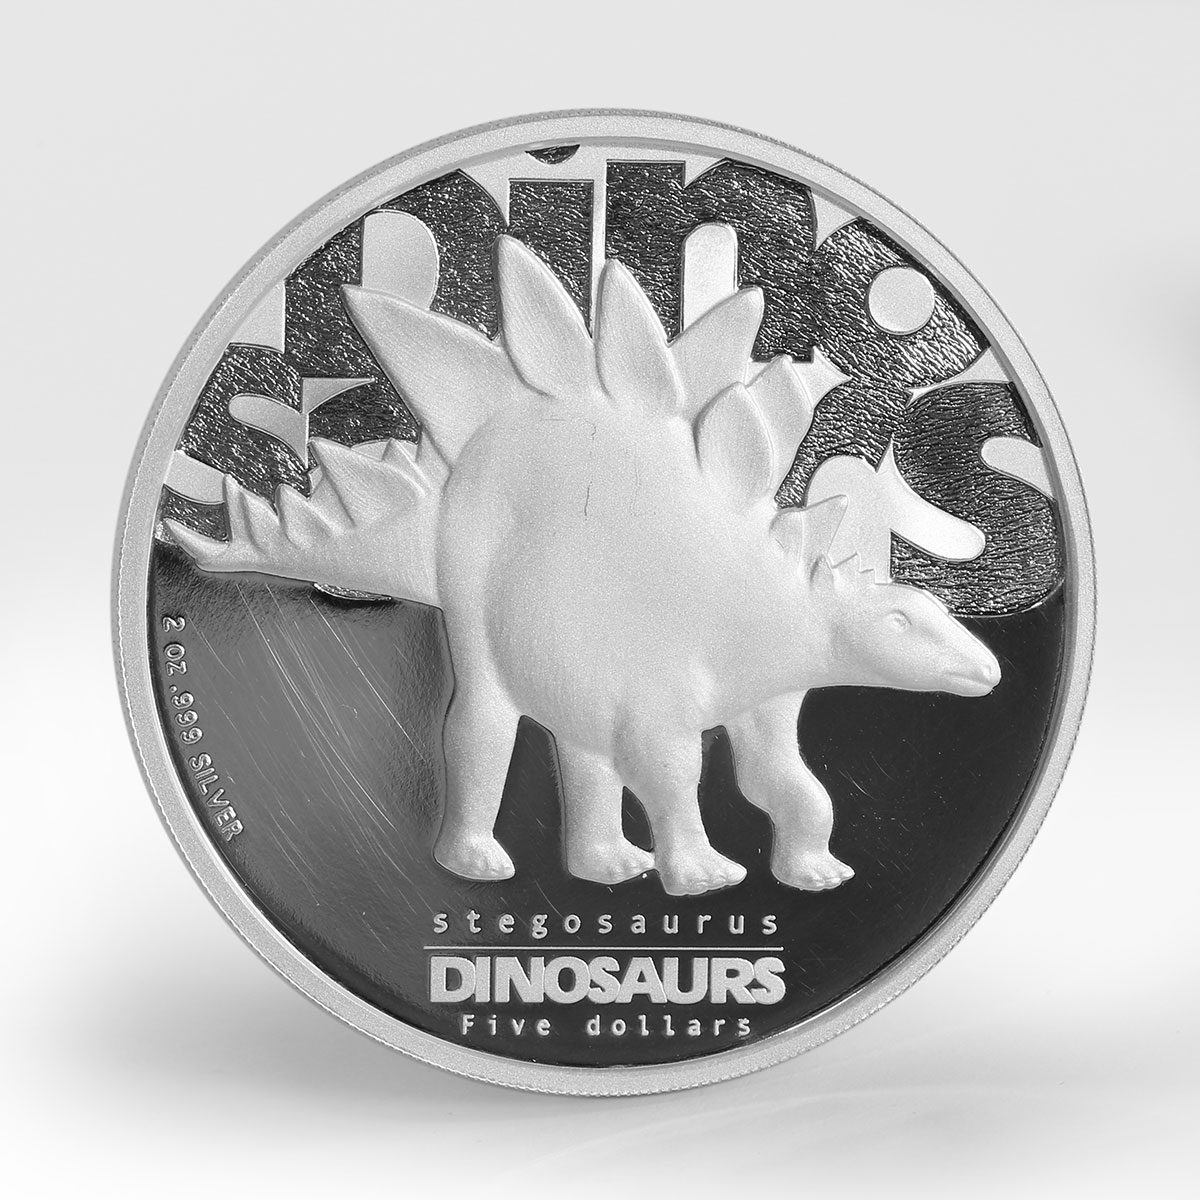 Tuvalu 5 dollars Stegosaurus Dinosaurs series 2 oz silver proof coin 2002